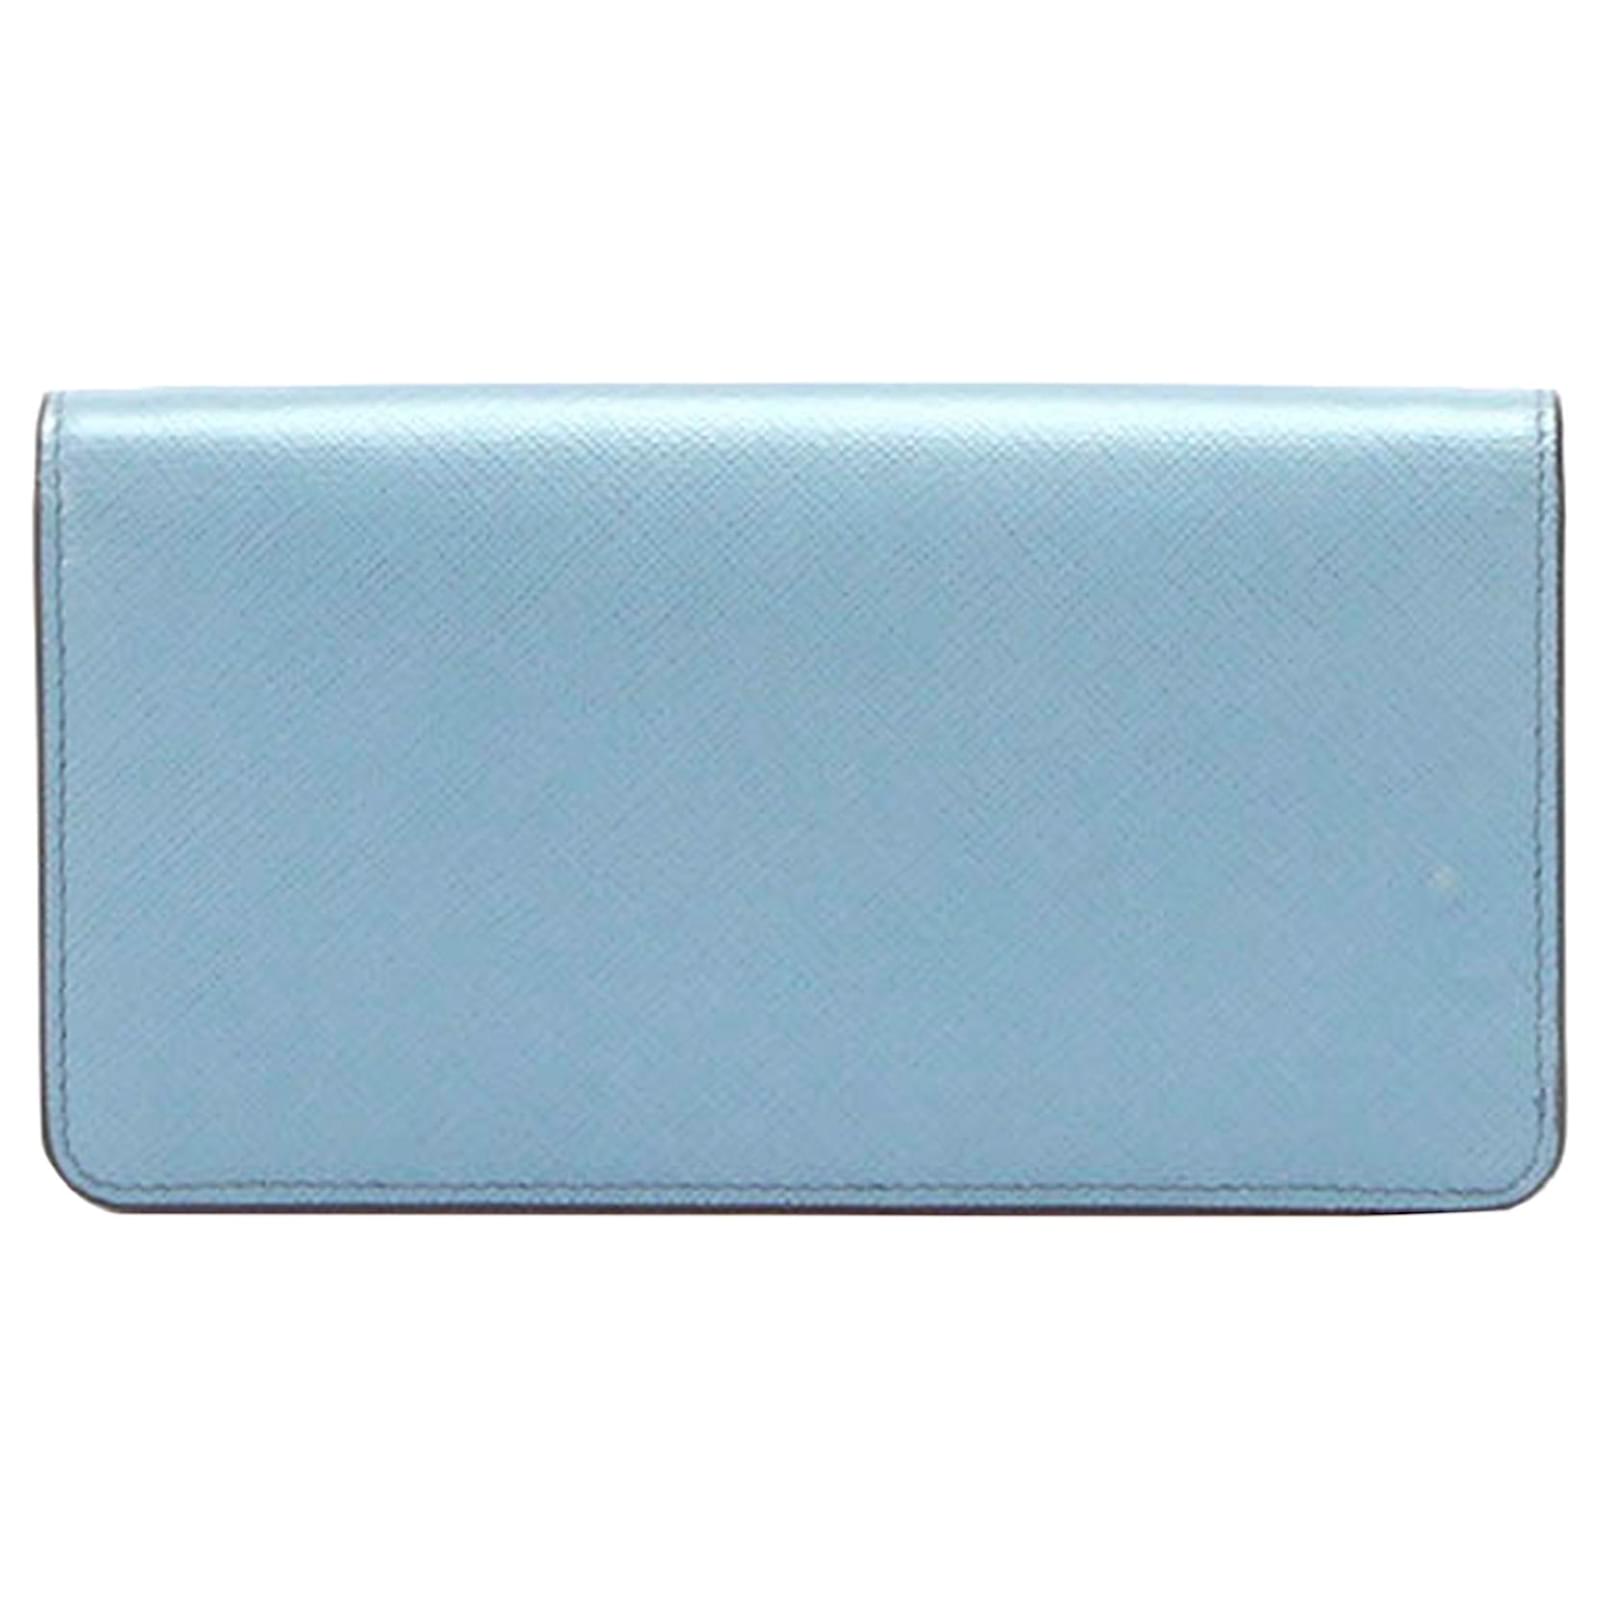 Prada Blue Saffiano Leather Wallet on Chain Light blue Pony-style